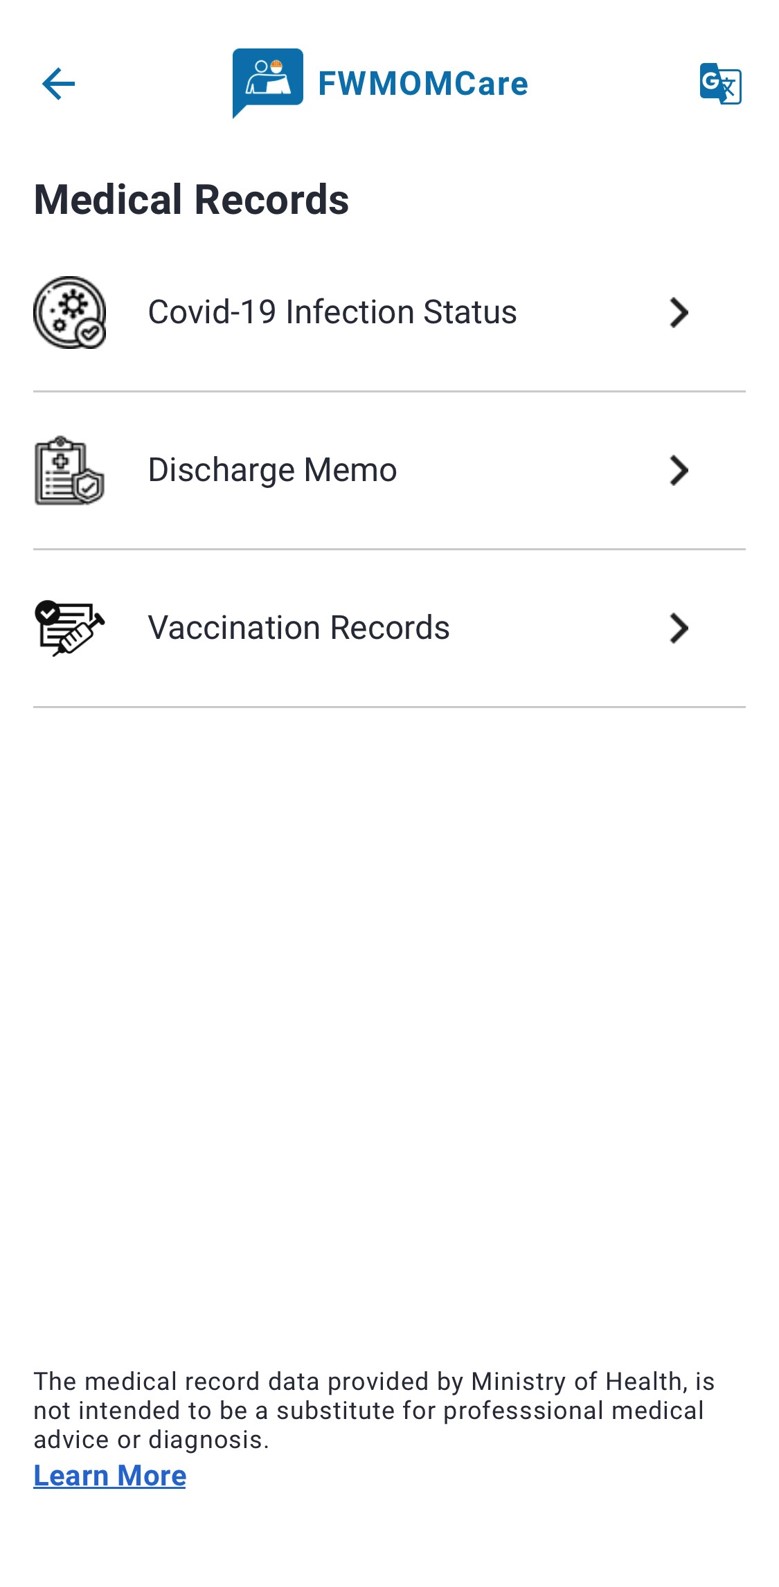 FWMOMCare - Medical records